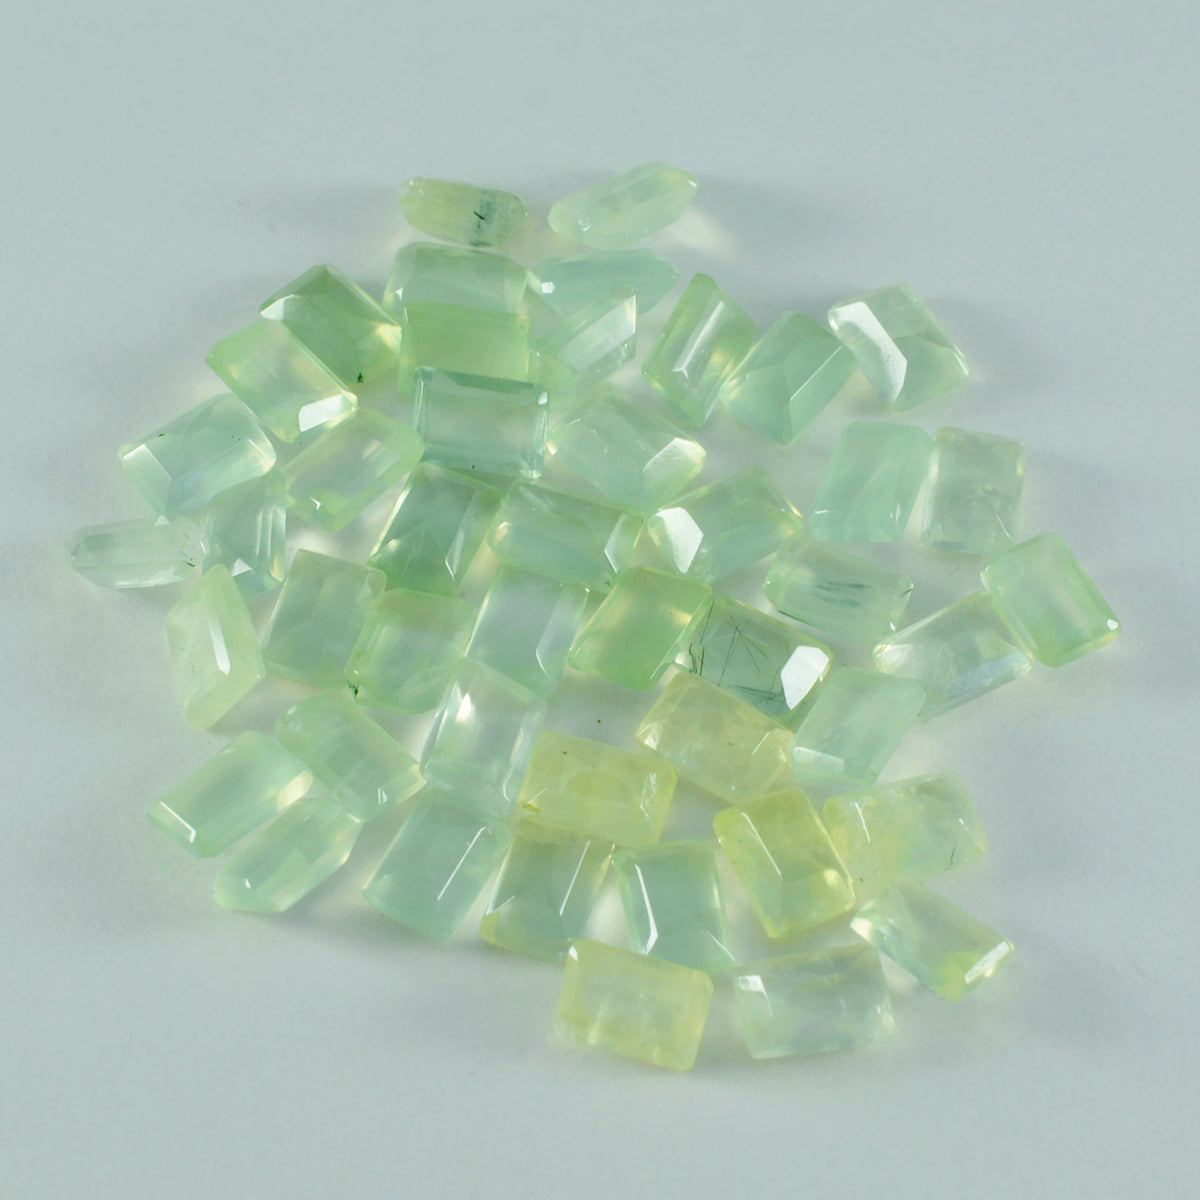 Riyogems 1PC Green Prehnite Faceted 3x5 mm Octagon Shape excellent Quality Gemstone